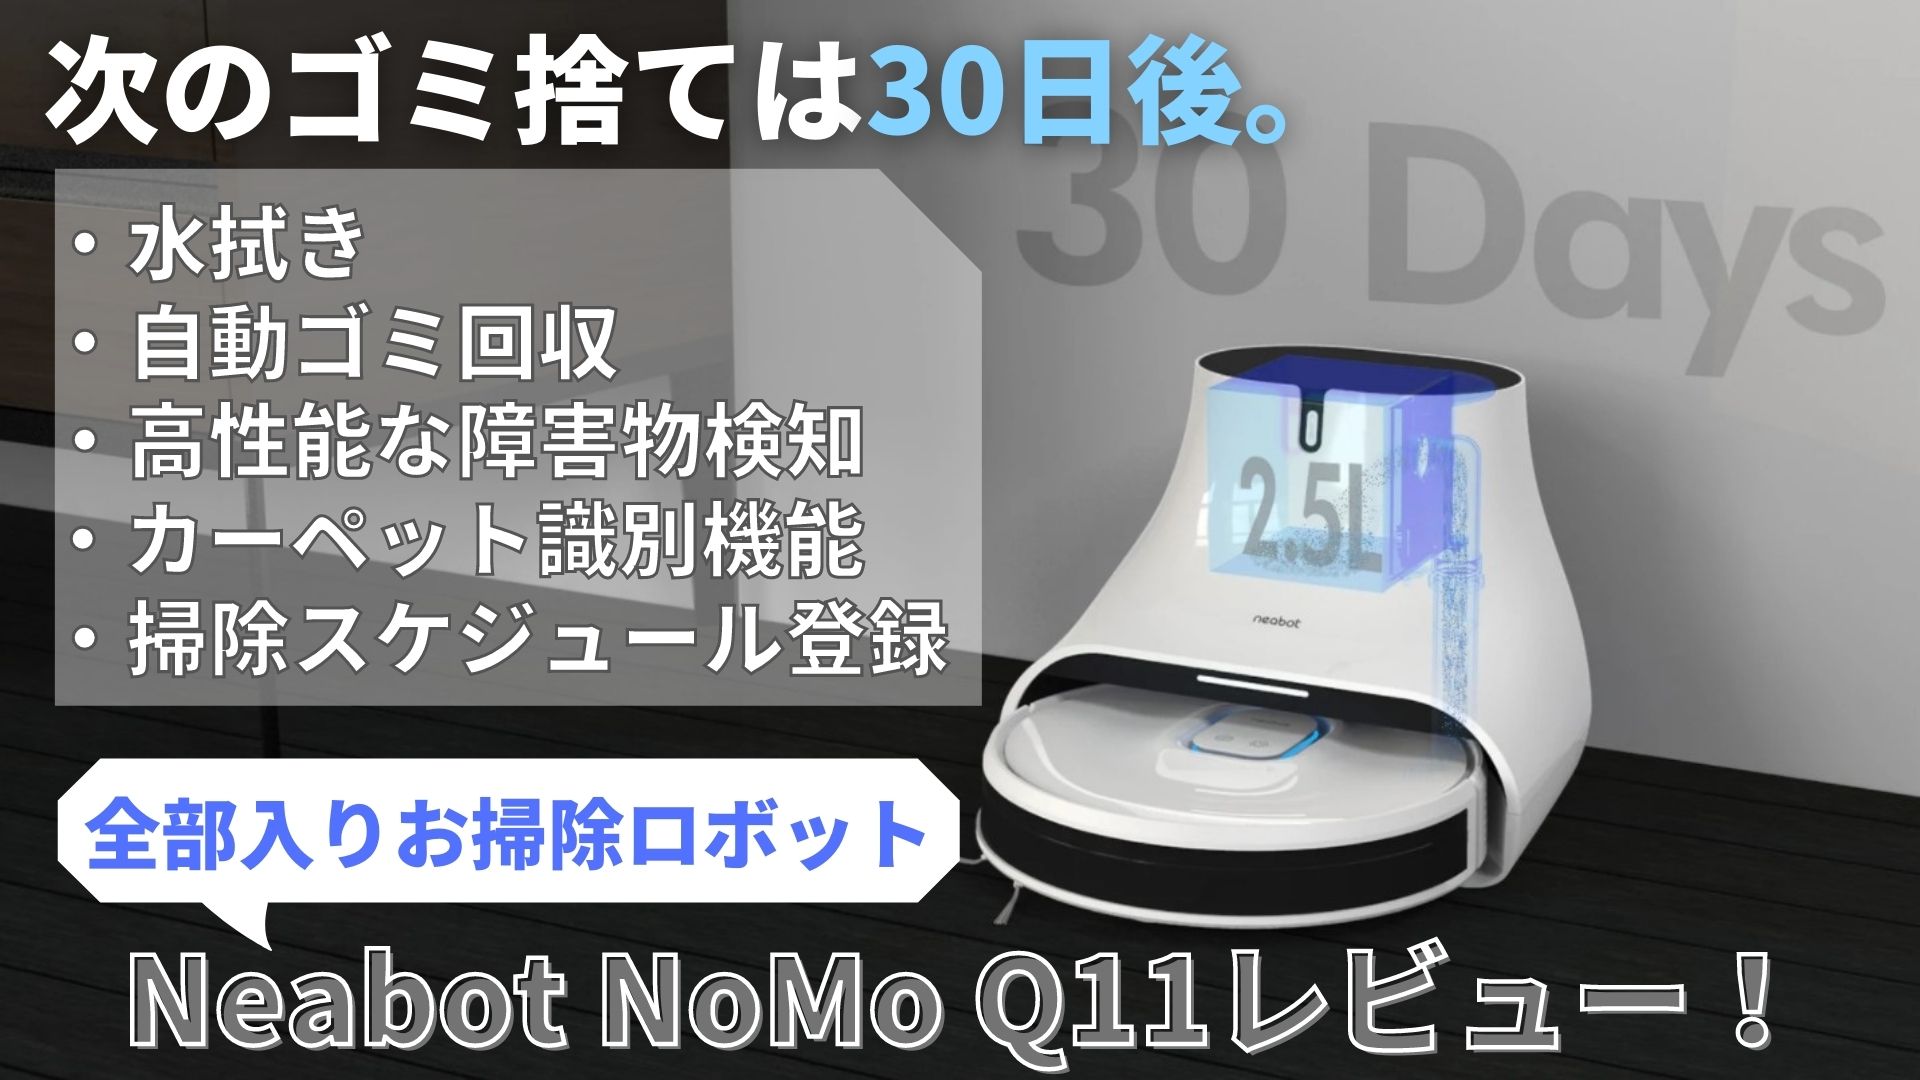 neabot NoMo Q11 HNDA ロボット掃除機 ゴミ収集も全自動 水拭き